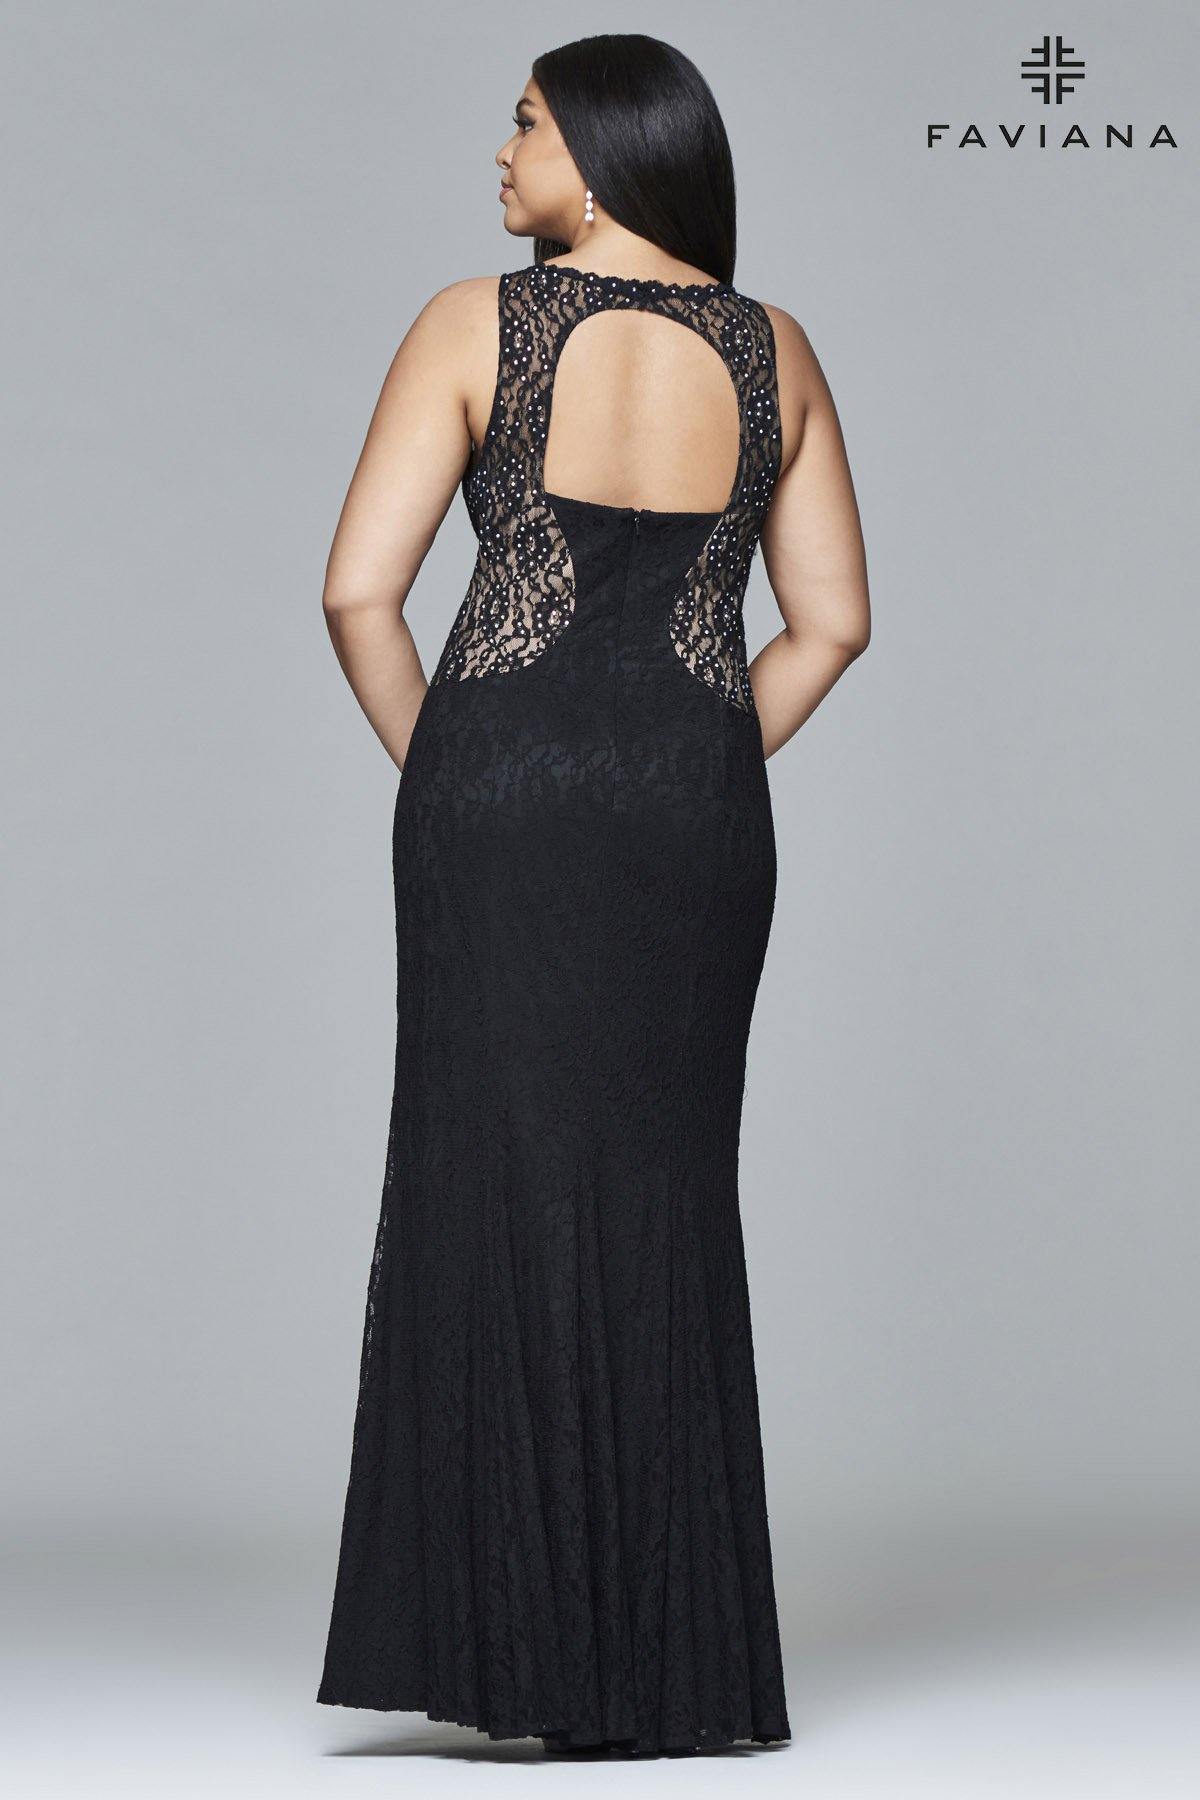 Faviana 9386 V-Neck Lace Plus Size Evening Dress - The Dress Outlet Faviana